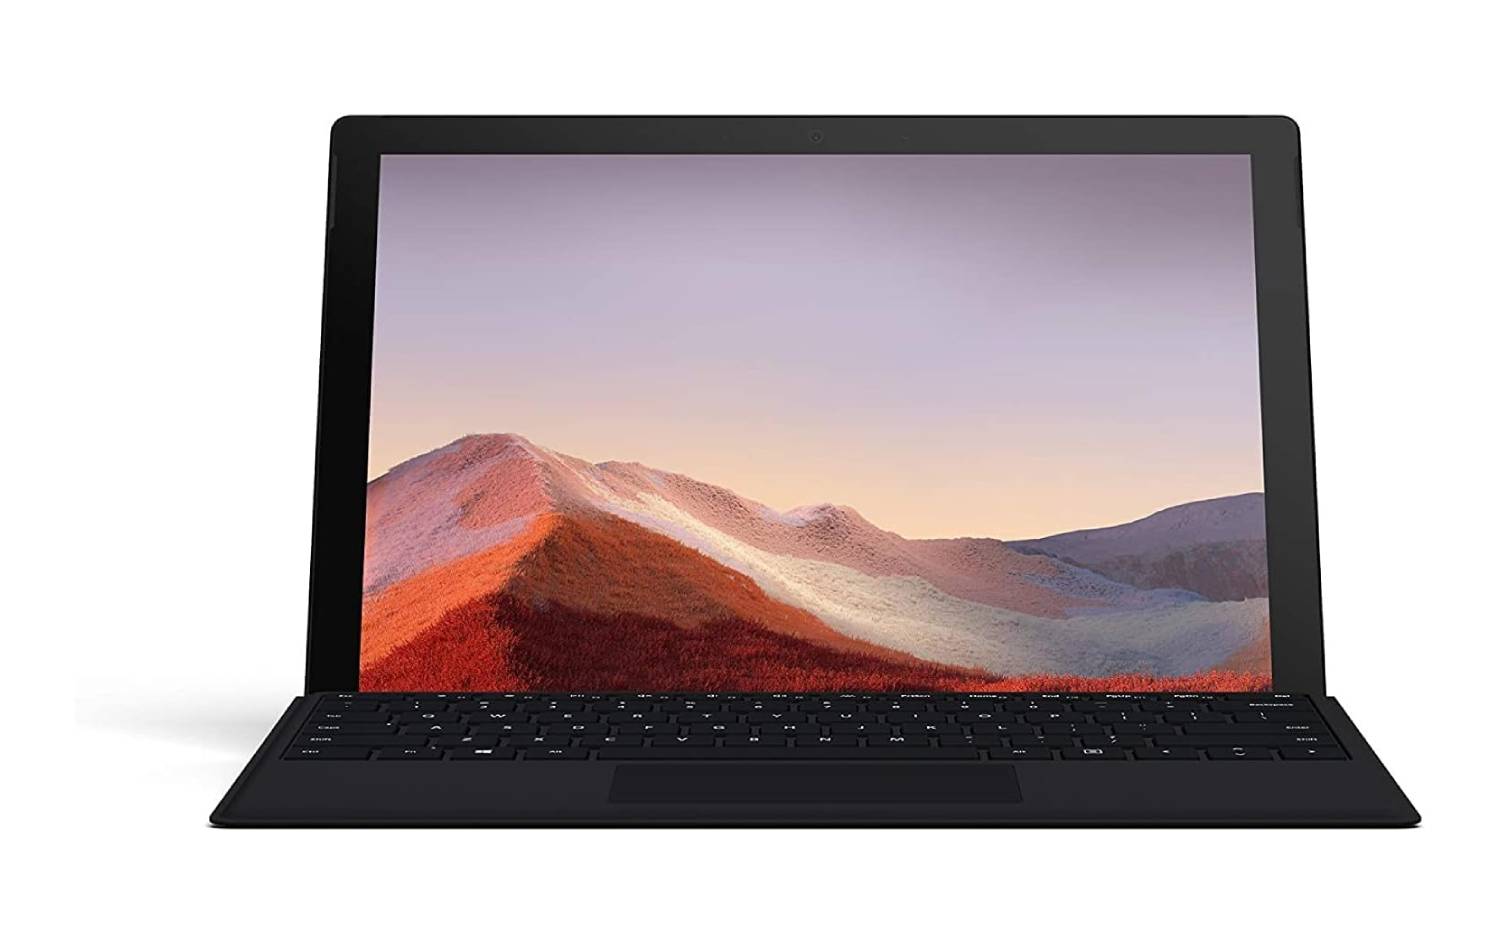 Microsoft Corporation Surface Pro 3 Intel Core i5 4th Gen Microsoft Windows 10 Pro Touchscreen